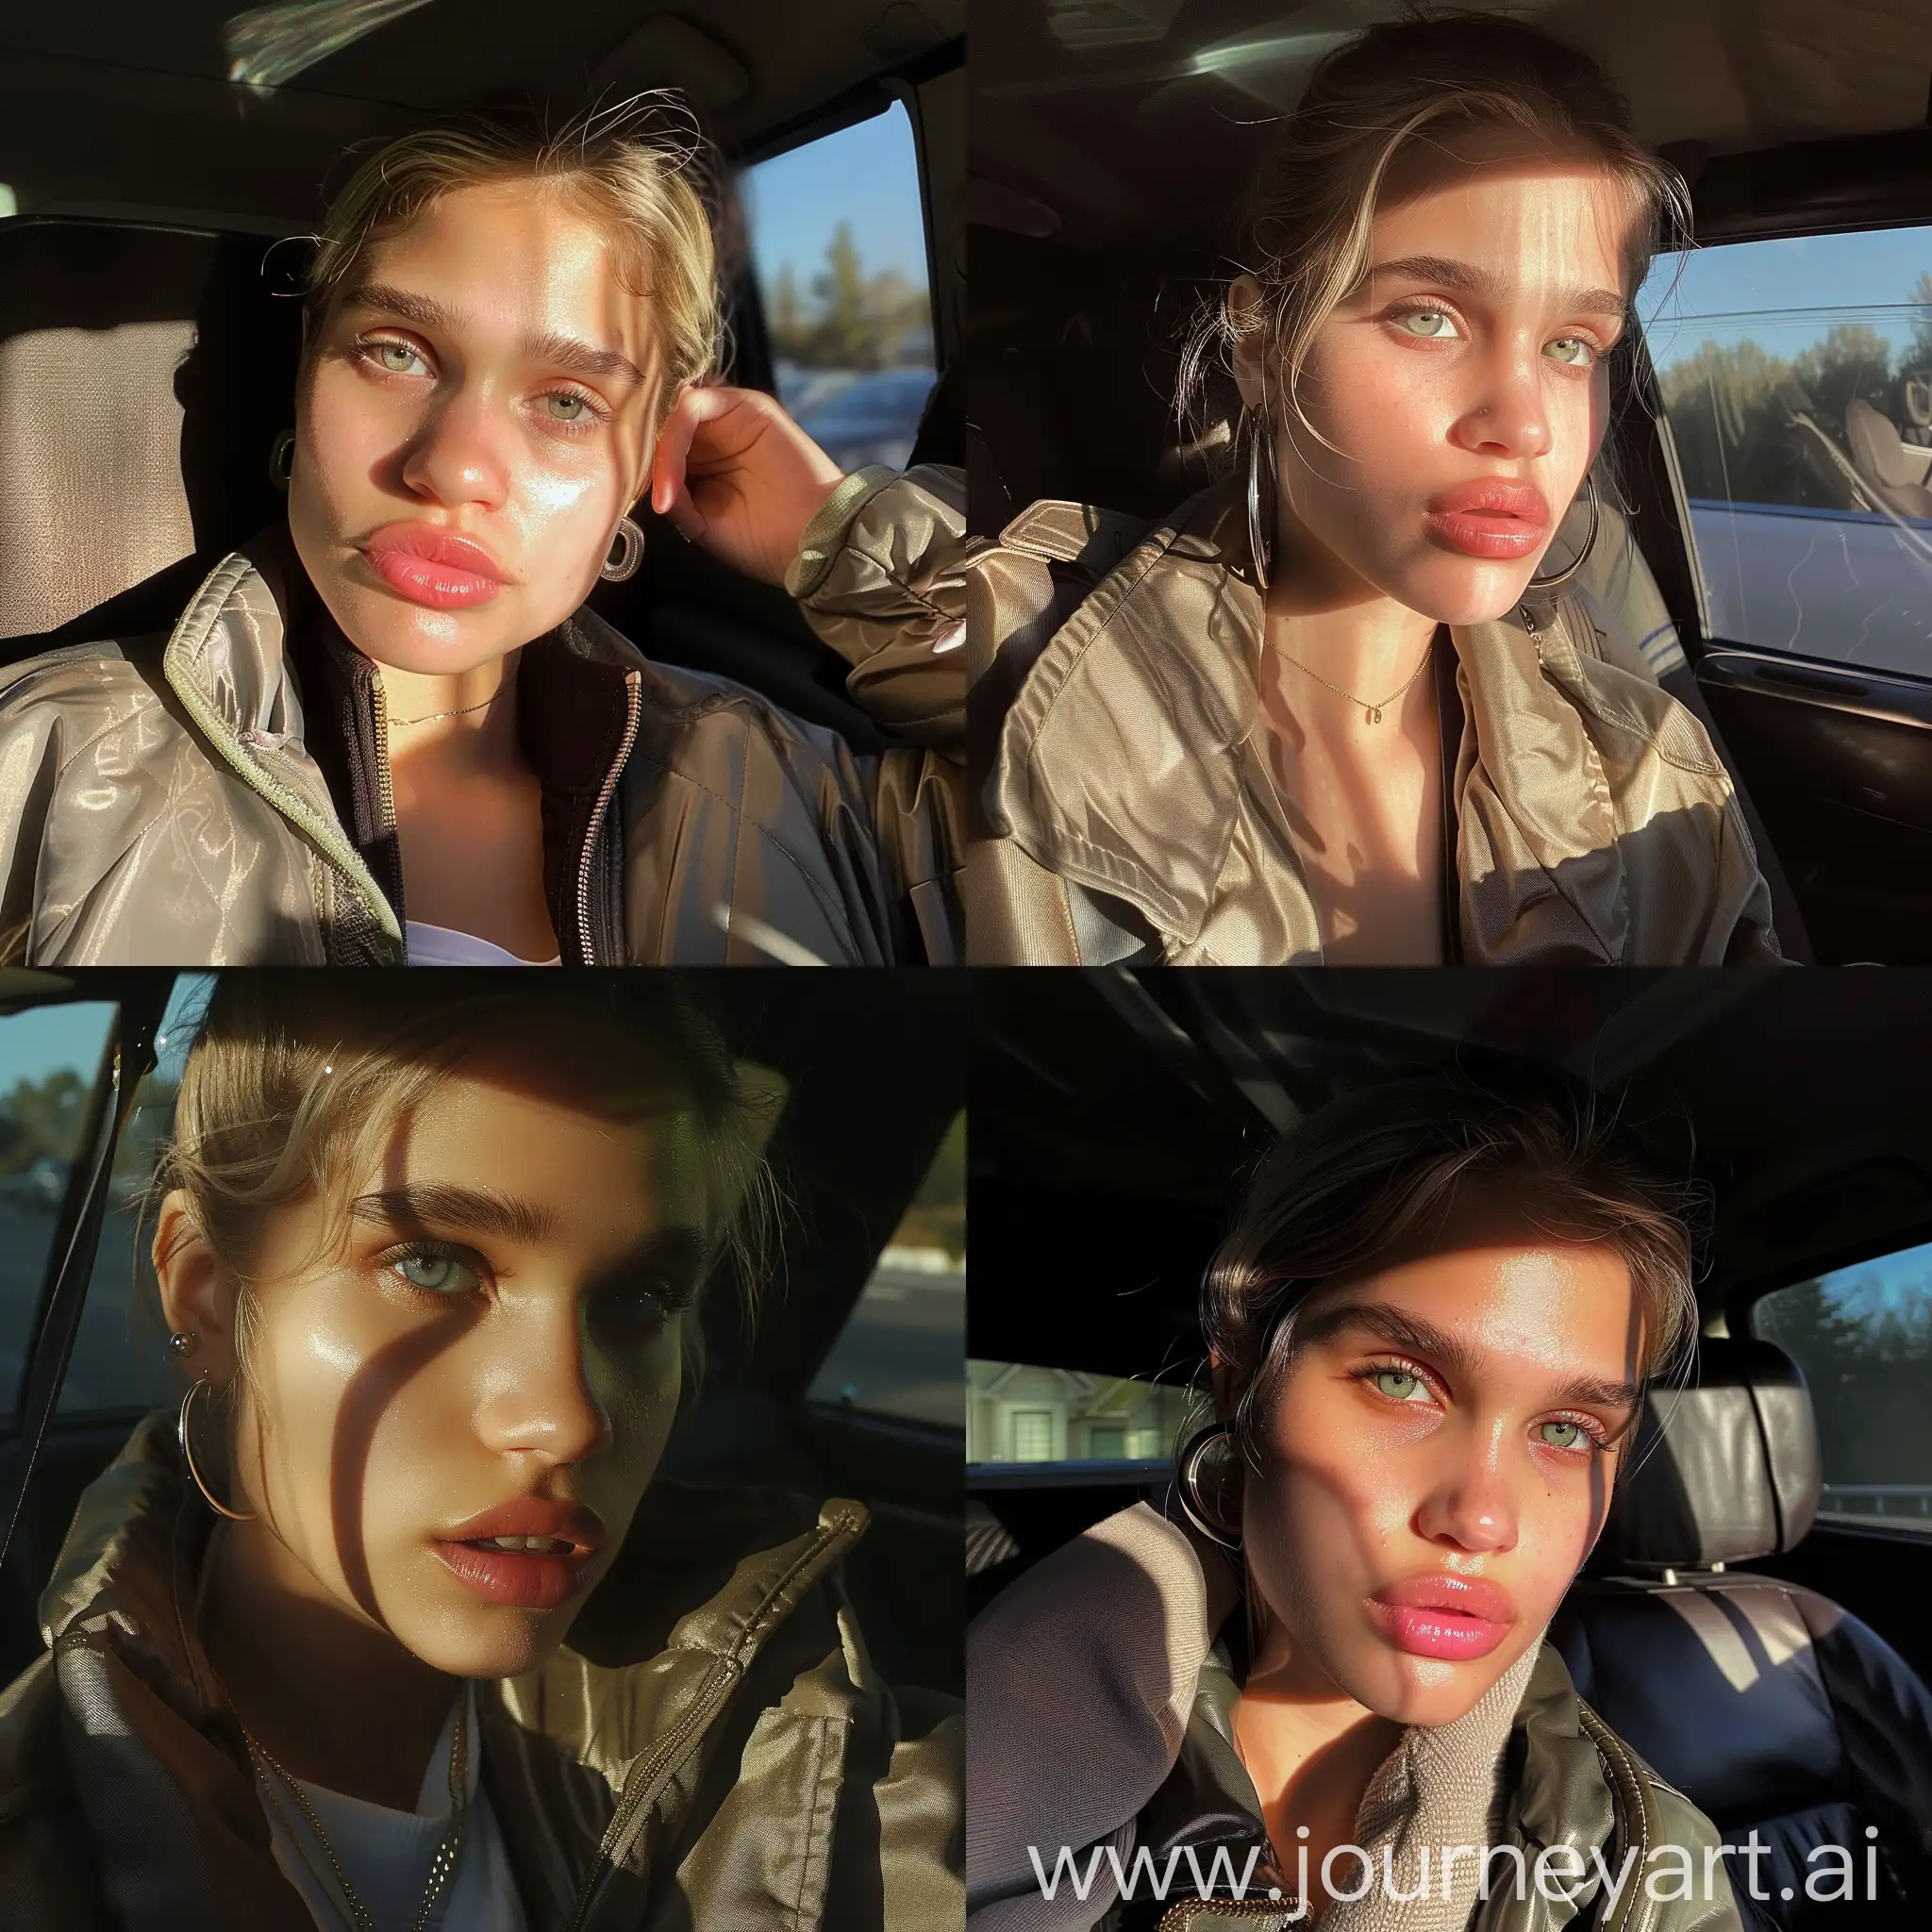 Super-Model-Teenage-Girl-Instagram-Selfie-in-Car-with-Realistic-Lighting-and-Shadows